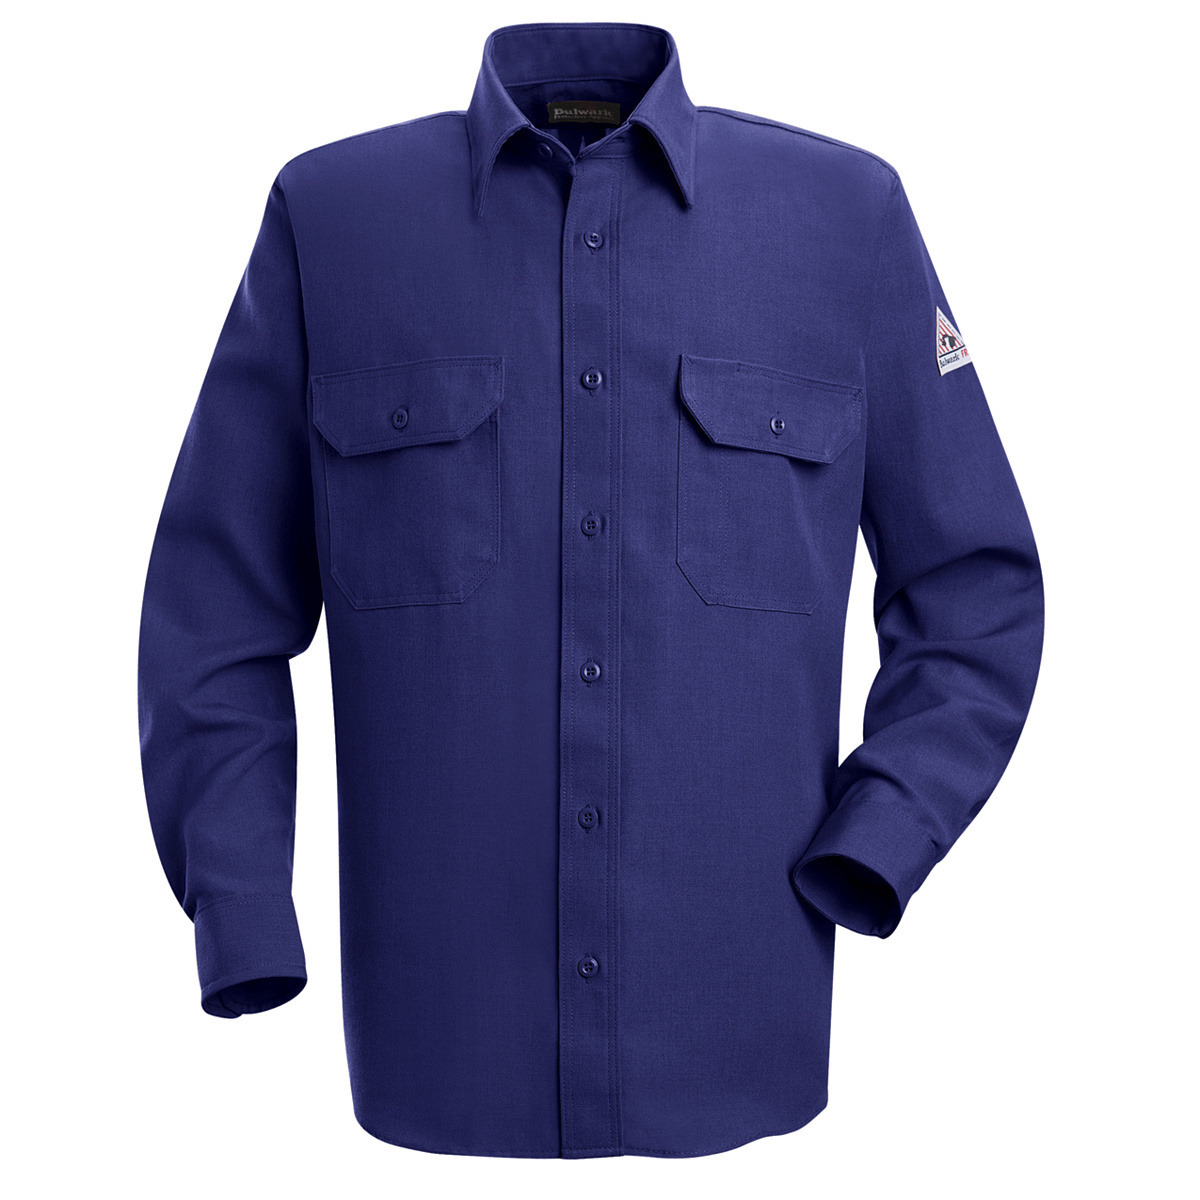 Bulwark® Large Tall Royal Blue Nomex® IIIA/Nomex® Aramid/Kevlar® Aramid Flame Resistant Uniform Shirt With Button Front Closure